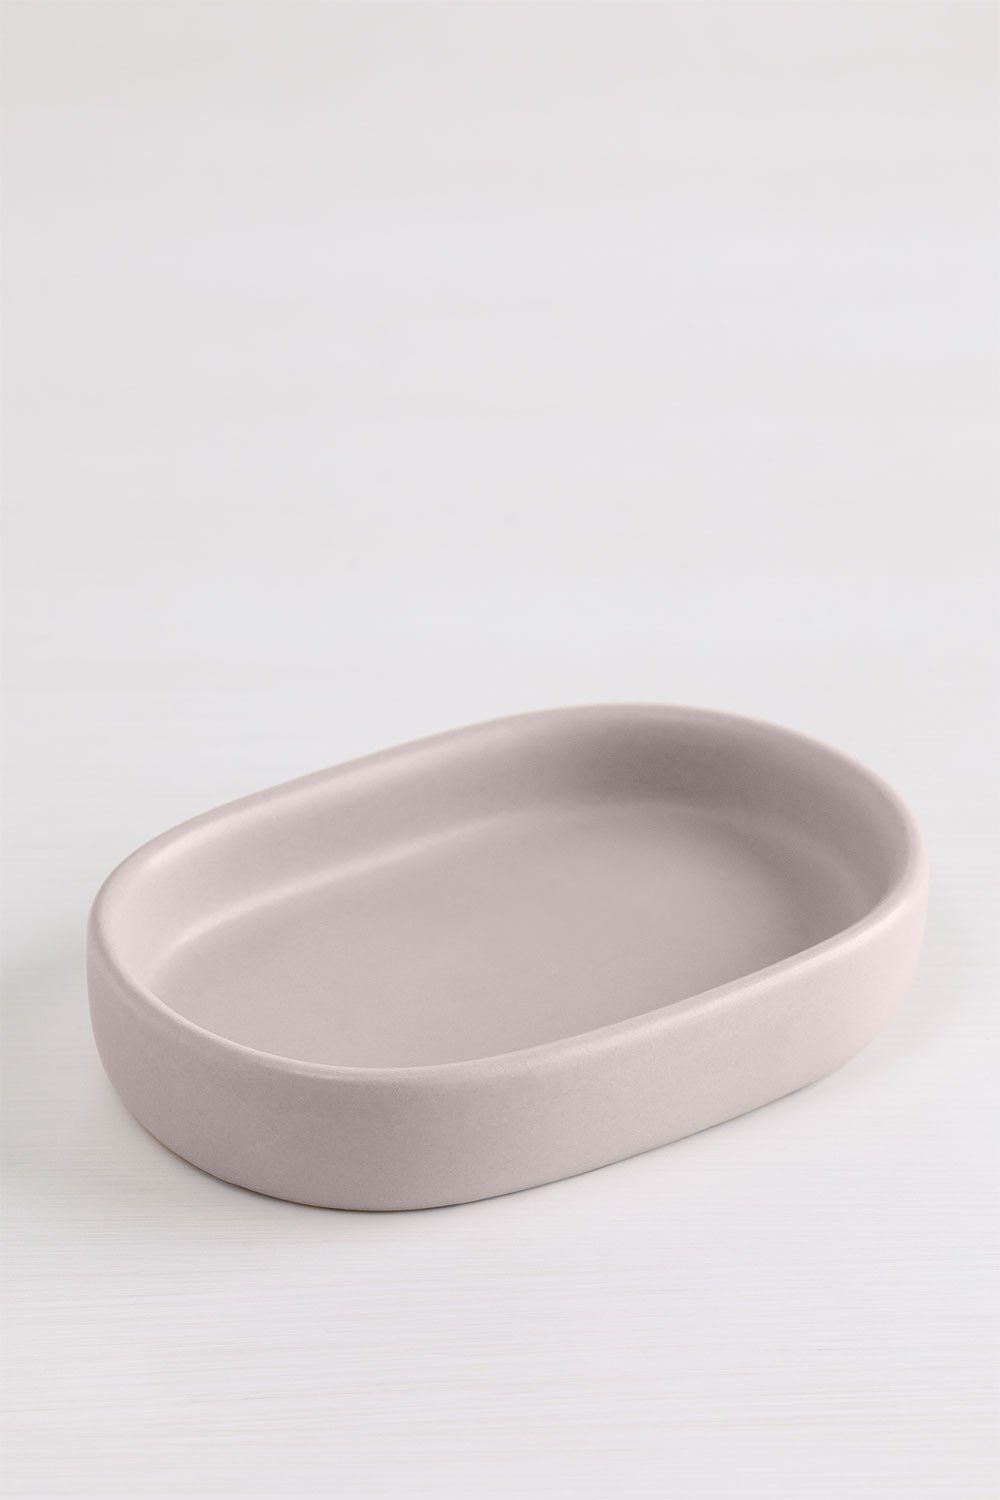 Pierk ceramic sopa dish , gallery image 1